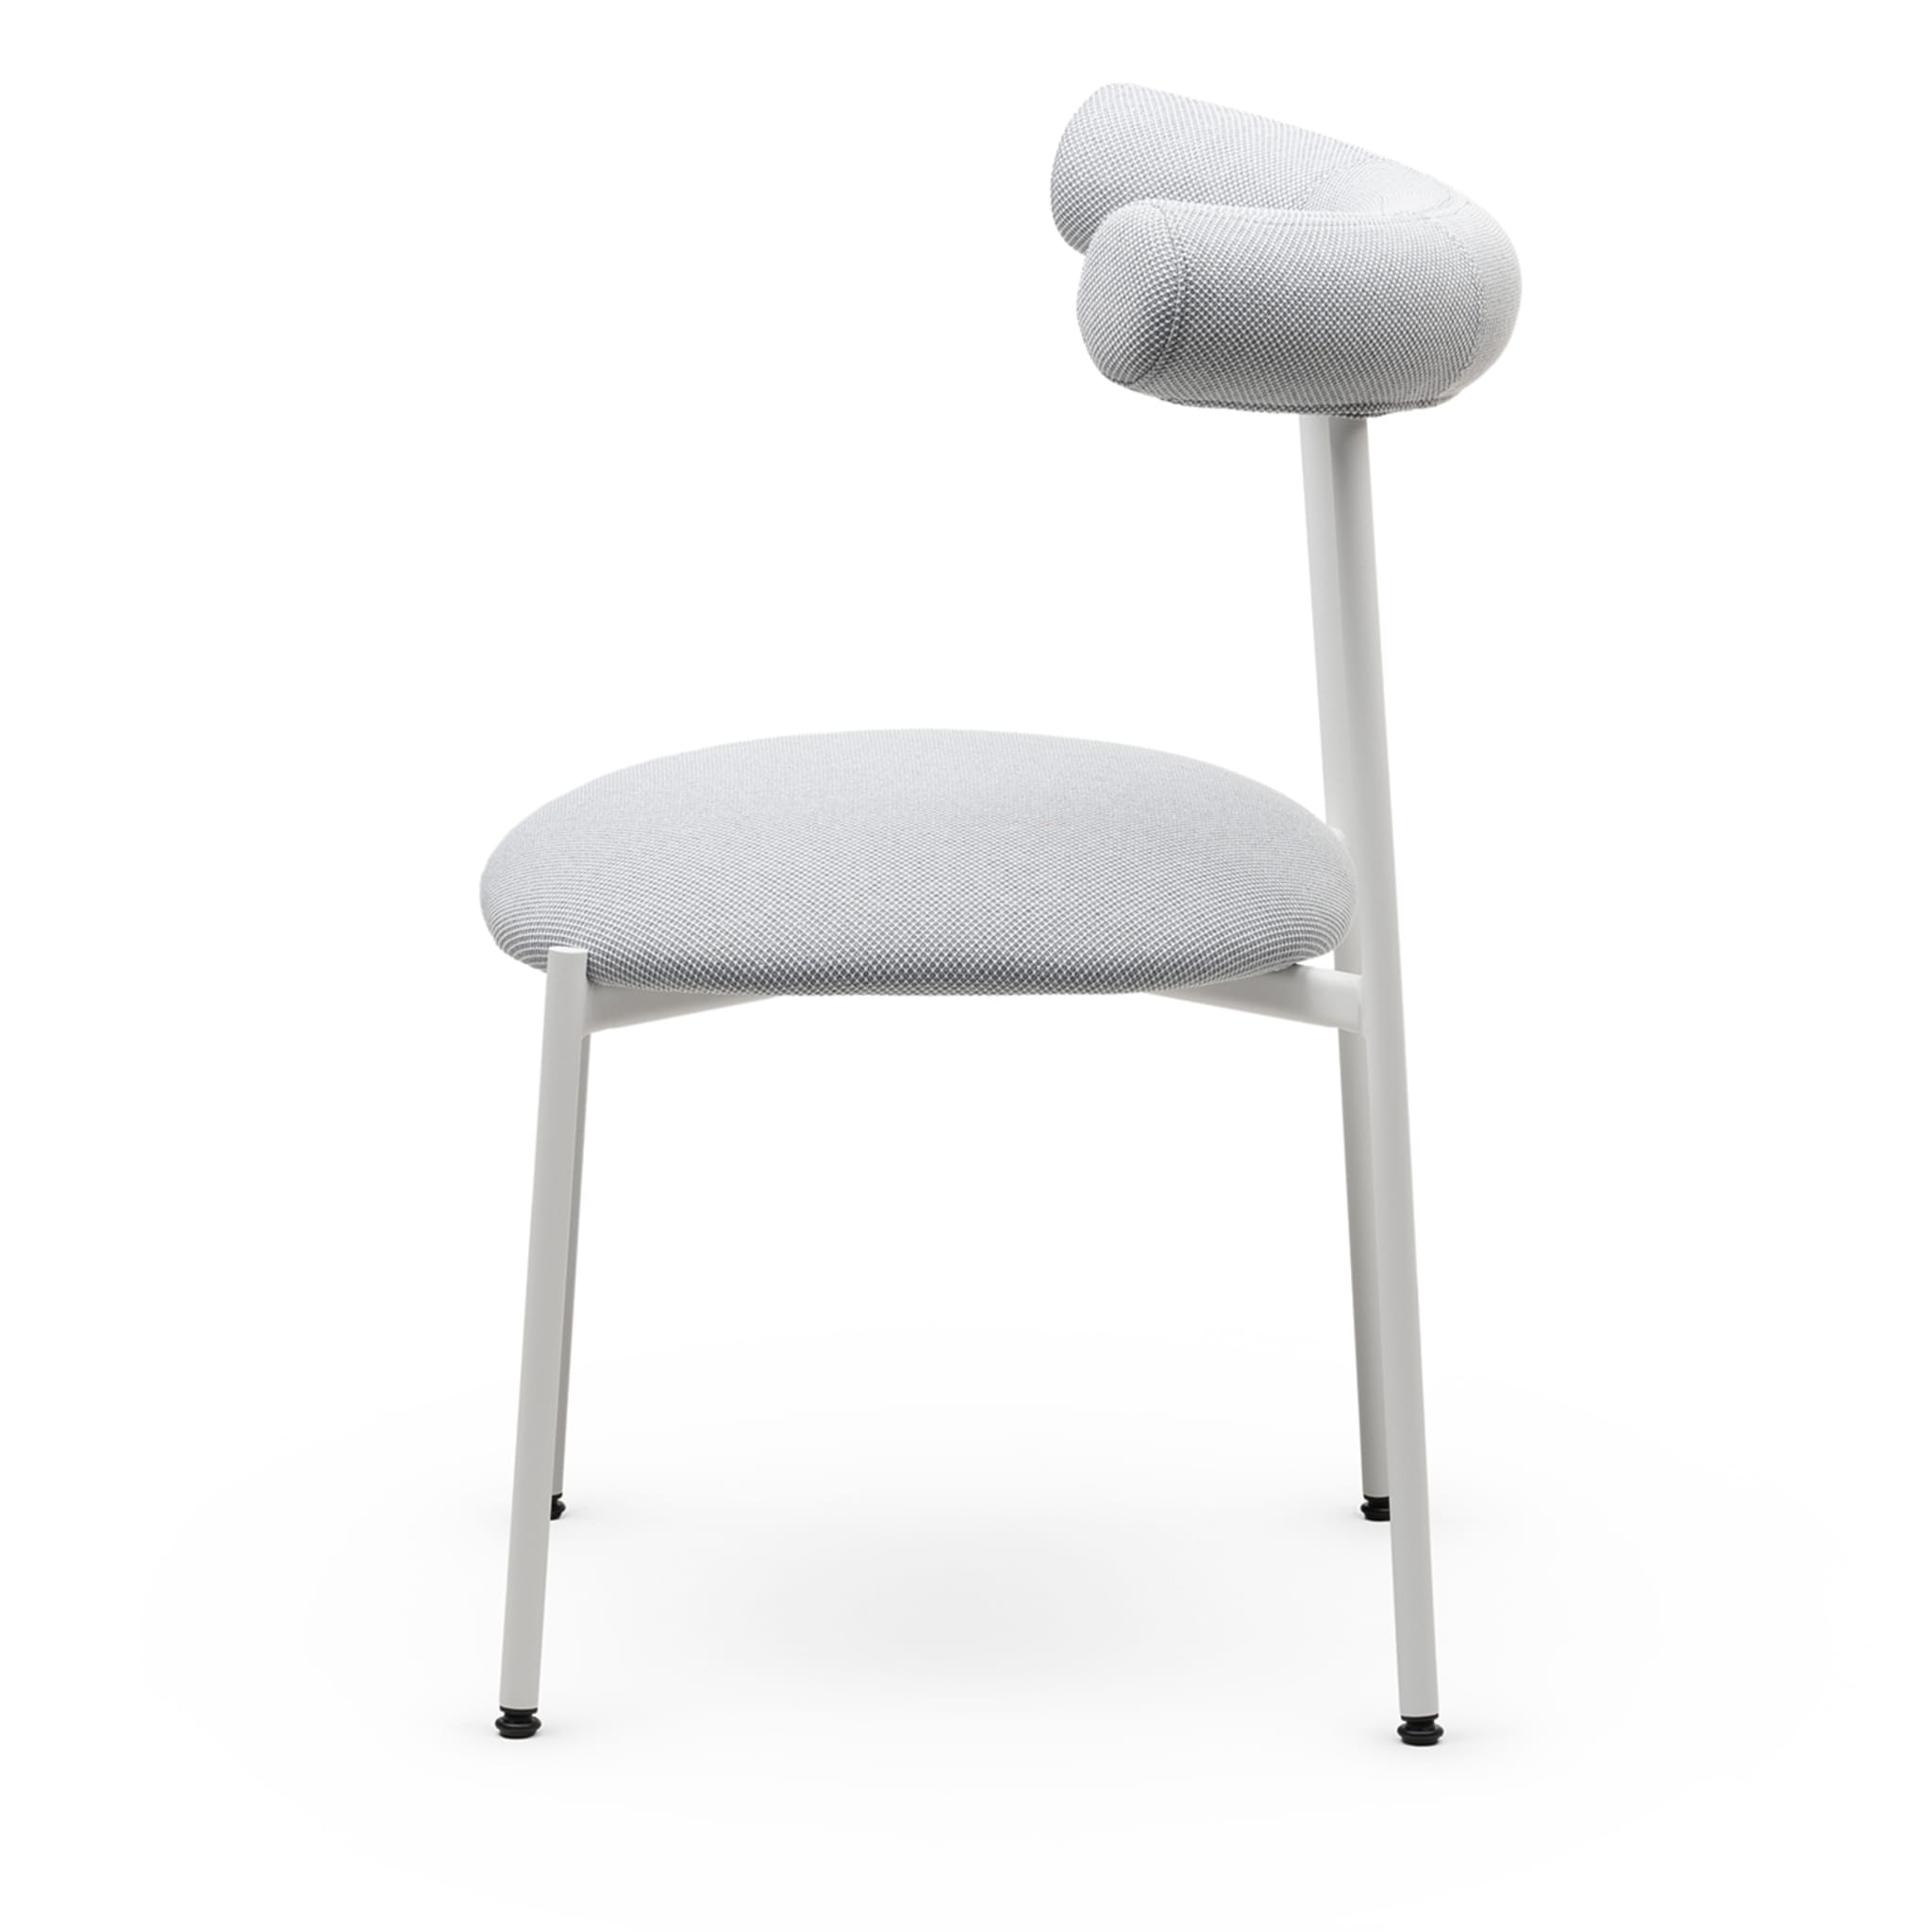 Pampa S White Chair by Studio Pastina - Alternative view 1